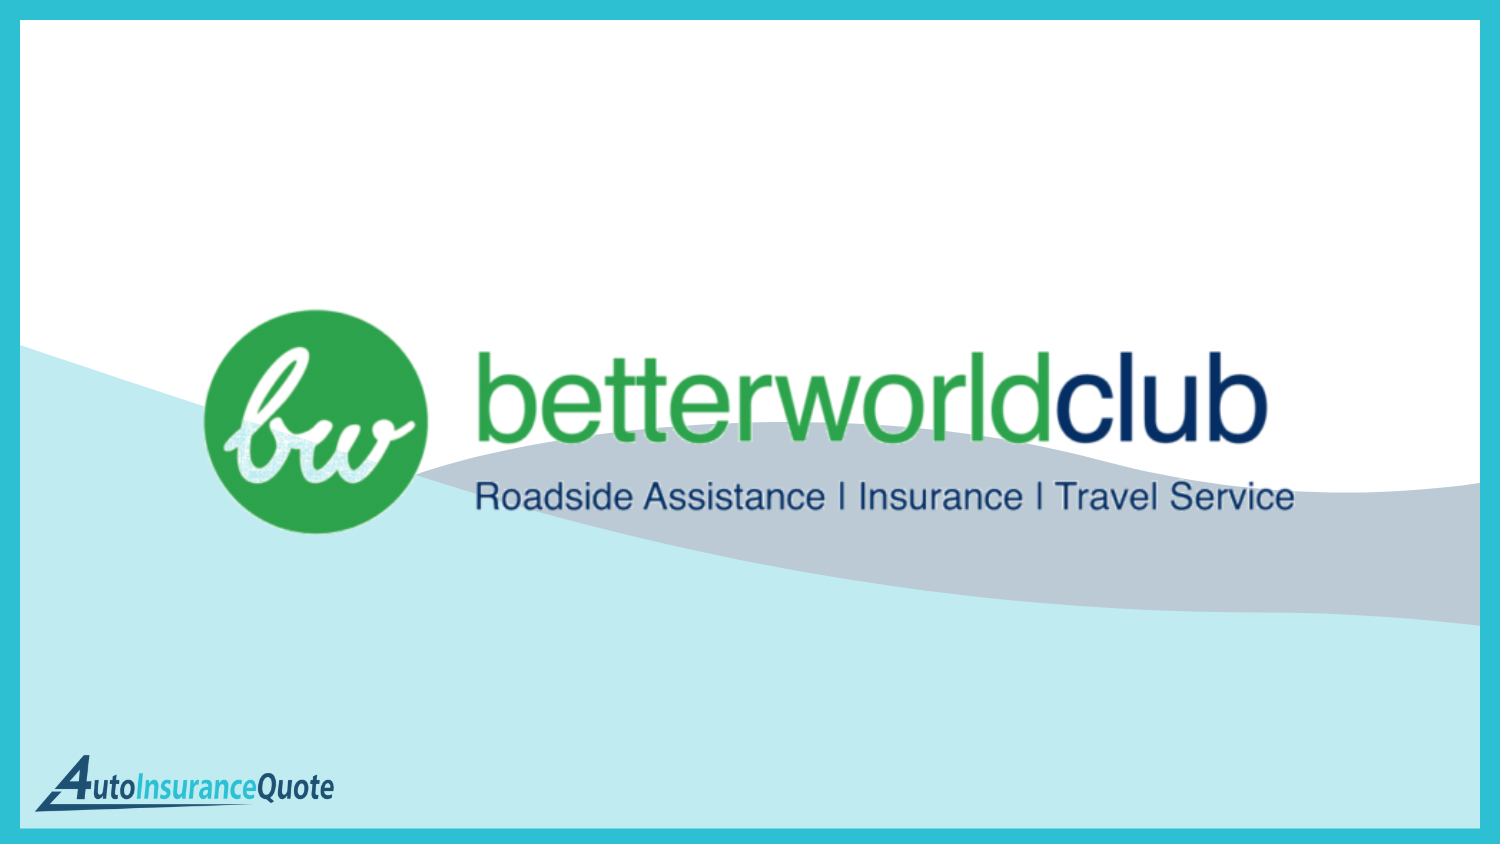 Better World Club: Best Roadside Assistance Coverage